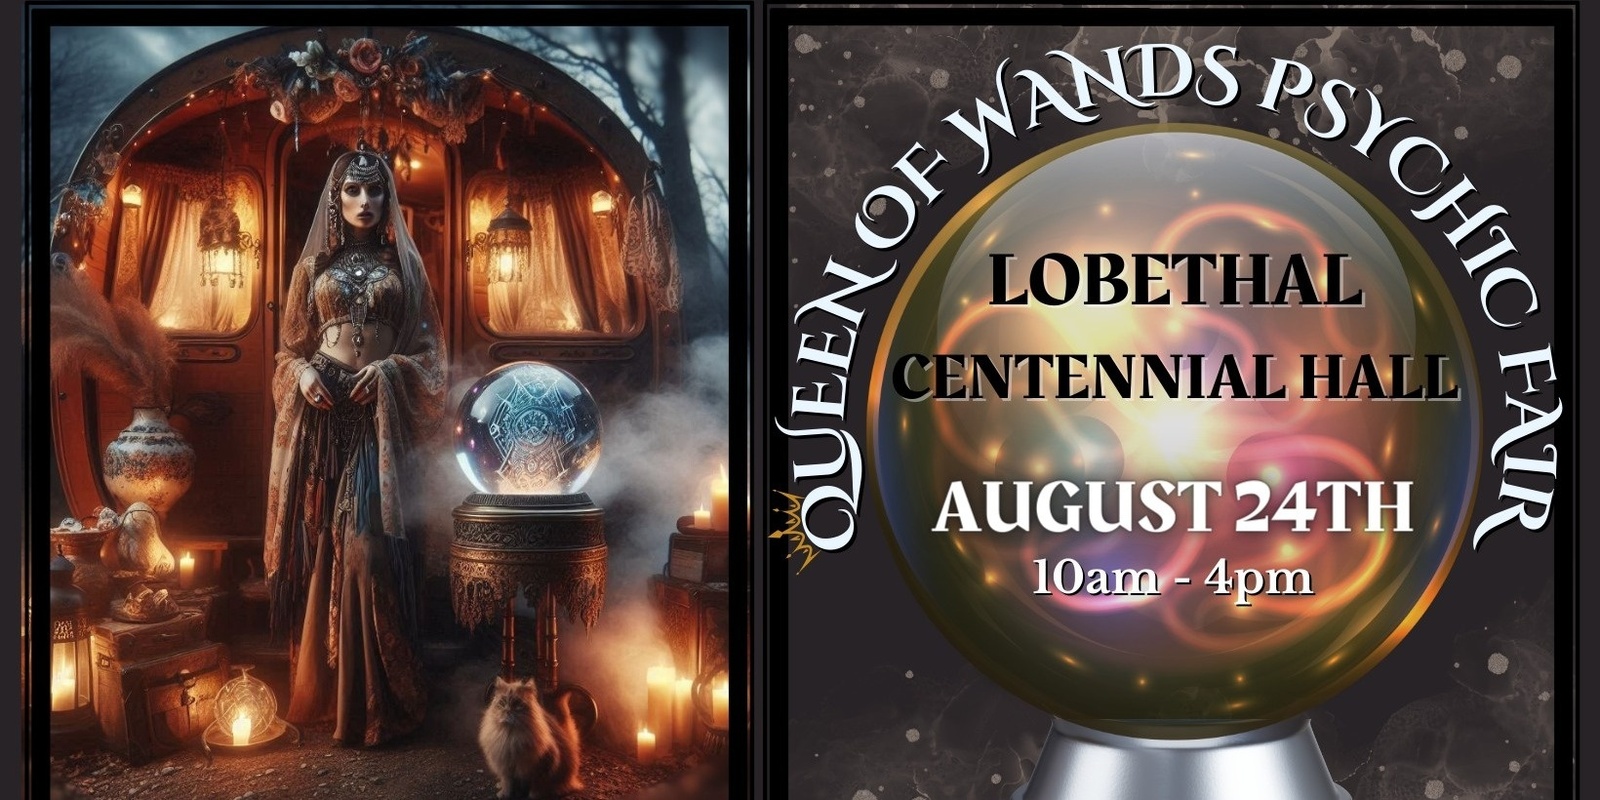 Banner image for Queen of Wands Psychic Fair - Lobethal Centennial Hall